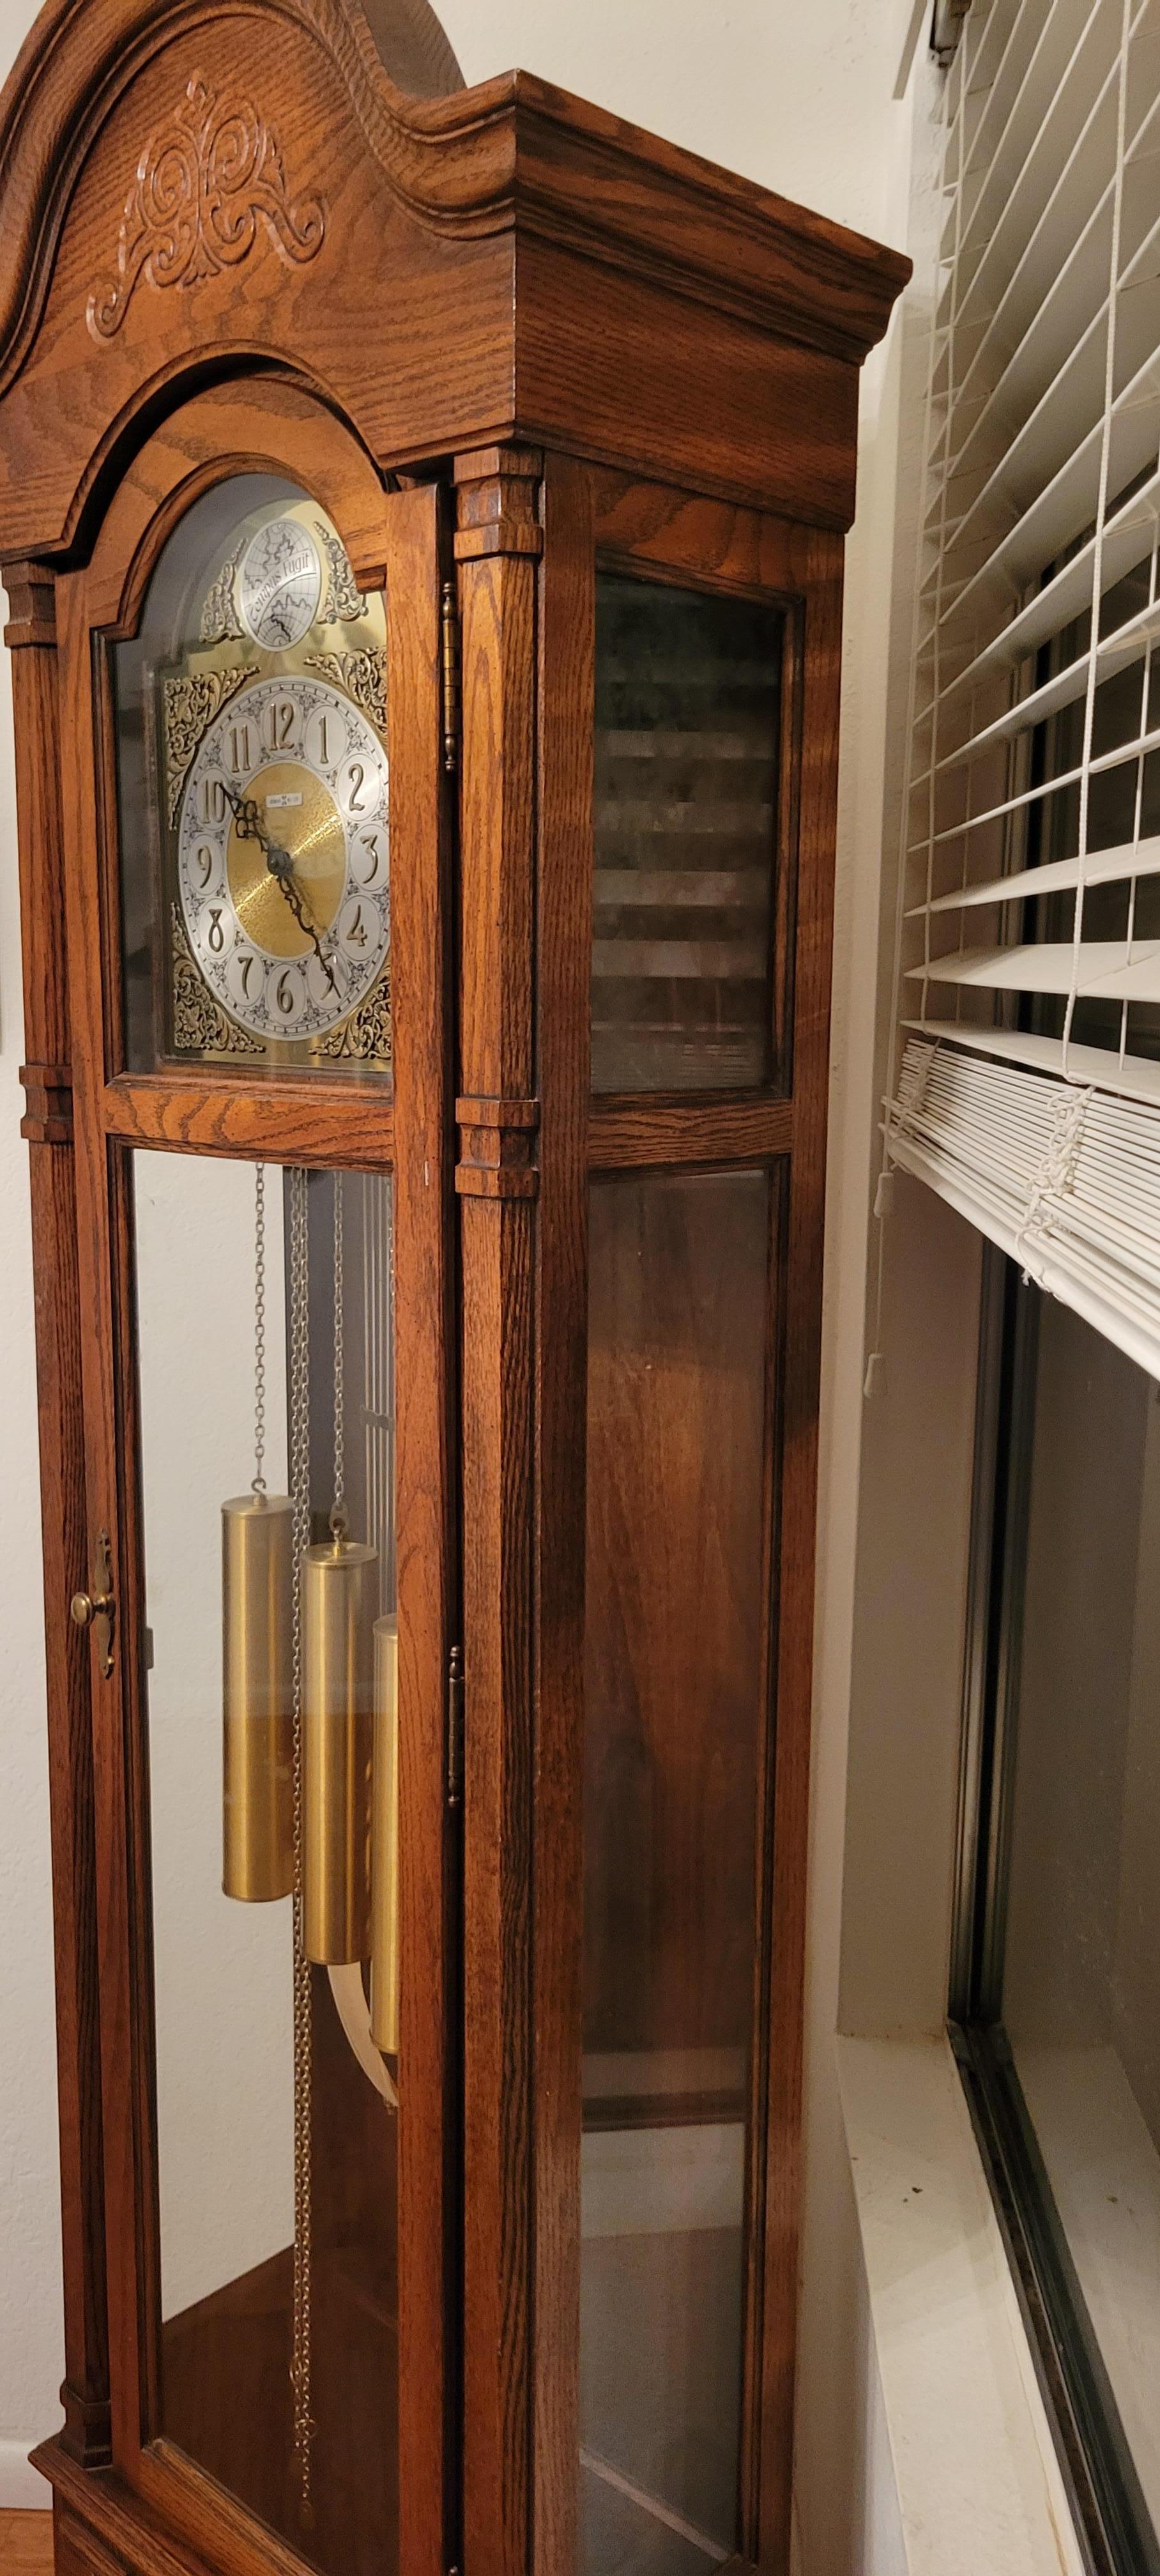 North American Vintage Howard Miller Westminster Chime Floor (Grandfather) Clock